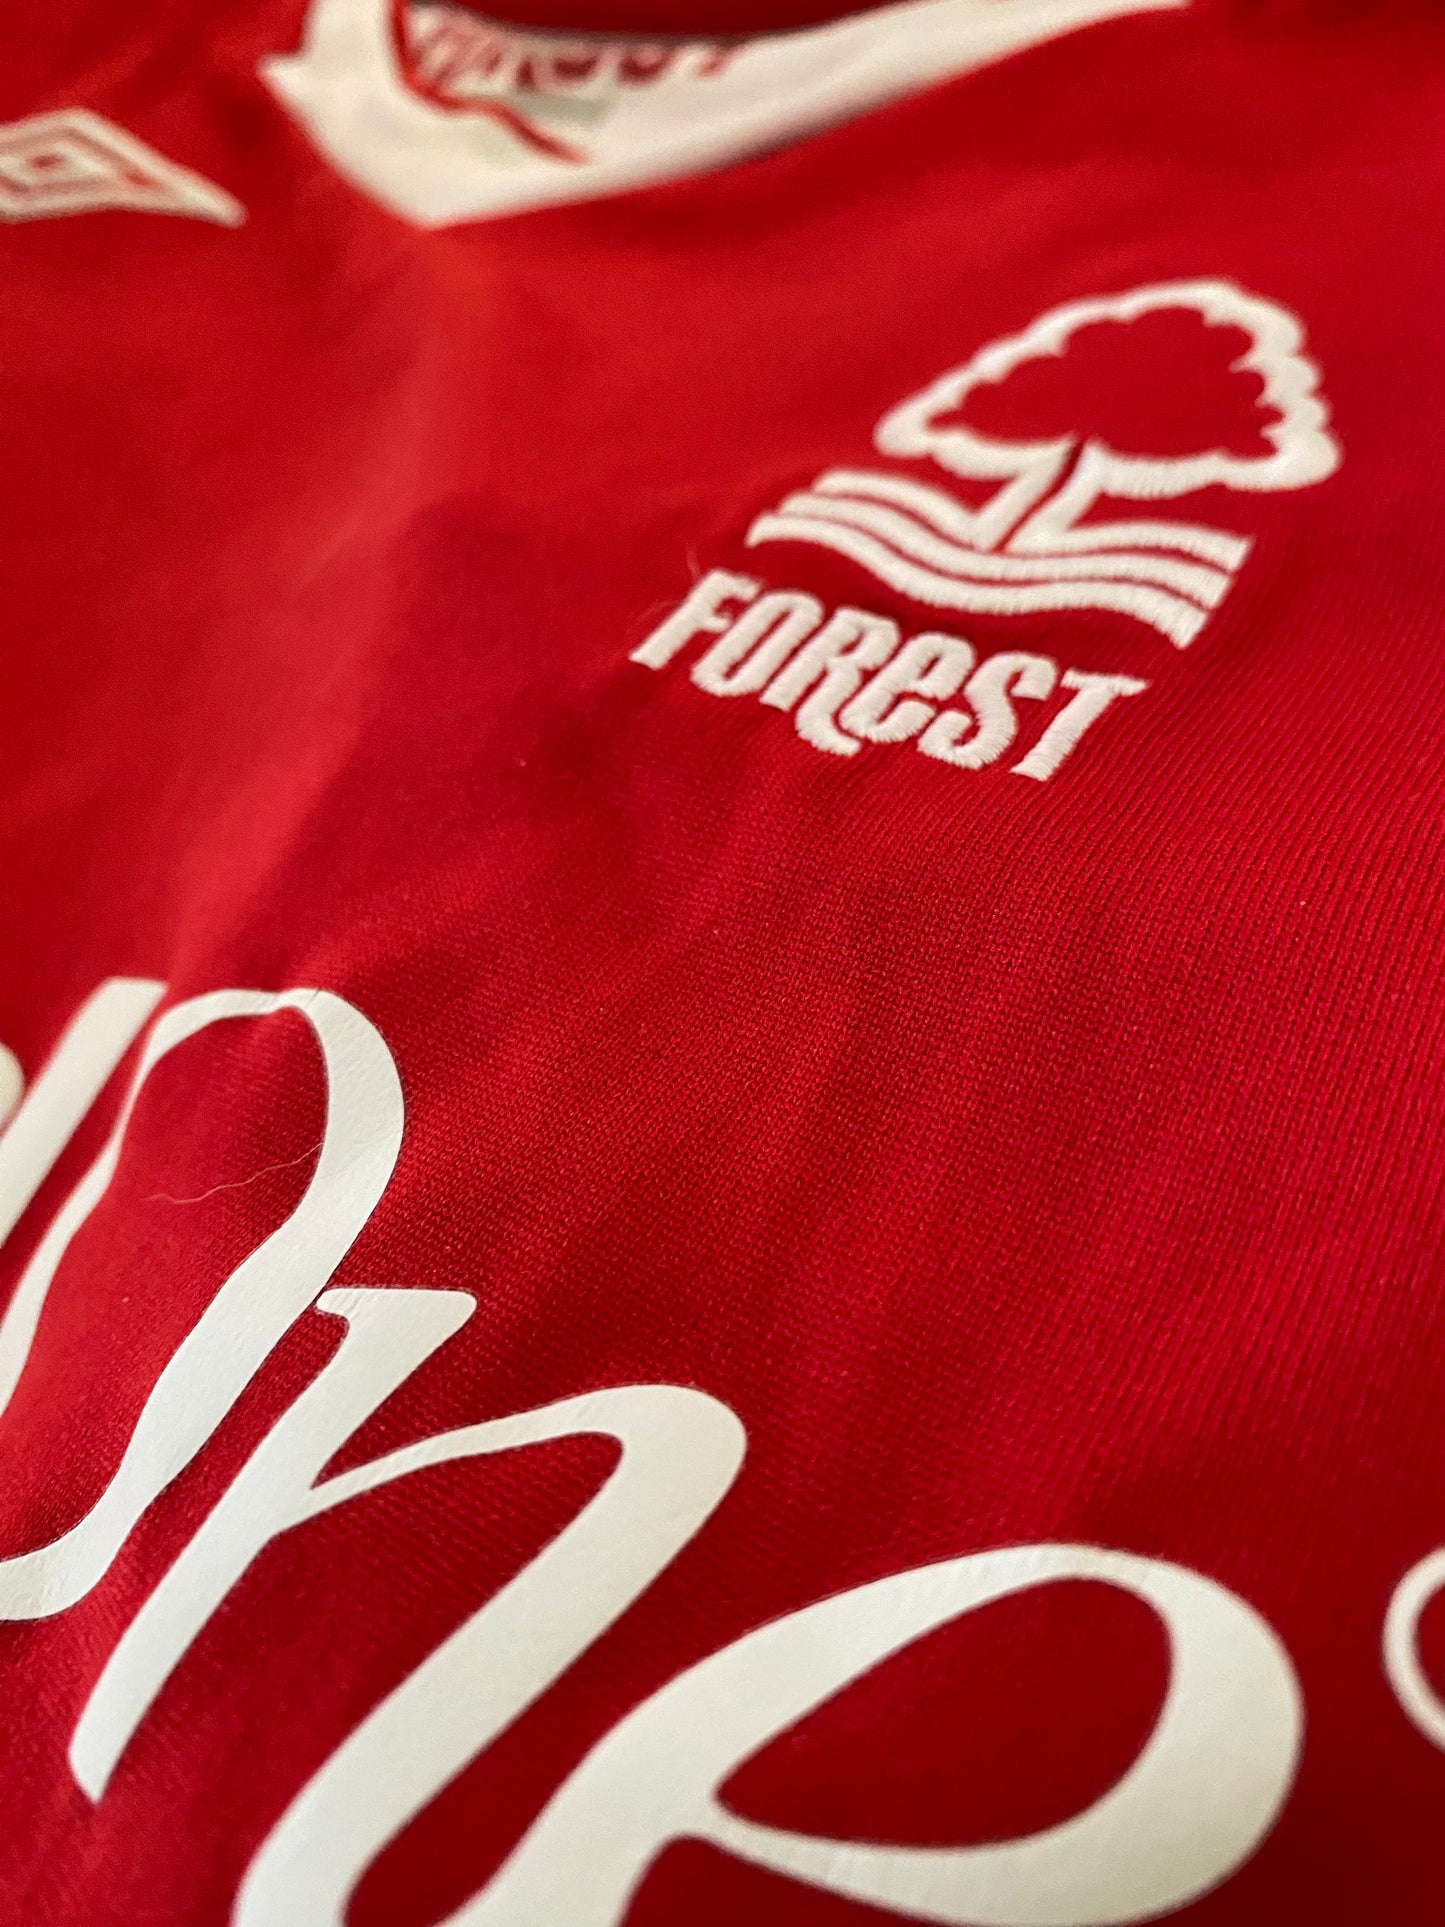 Nottingham Forrest 2006-2007 home shirt